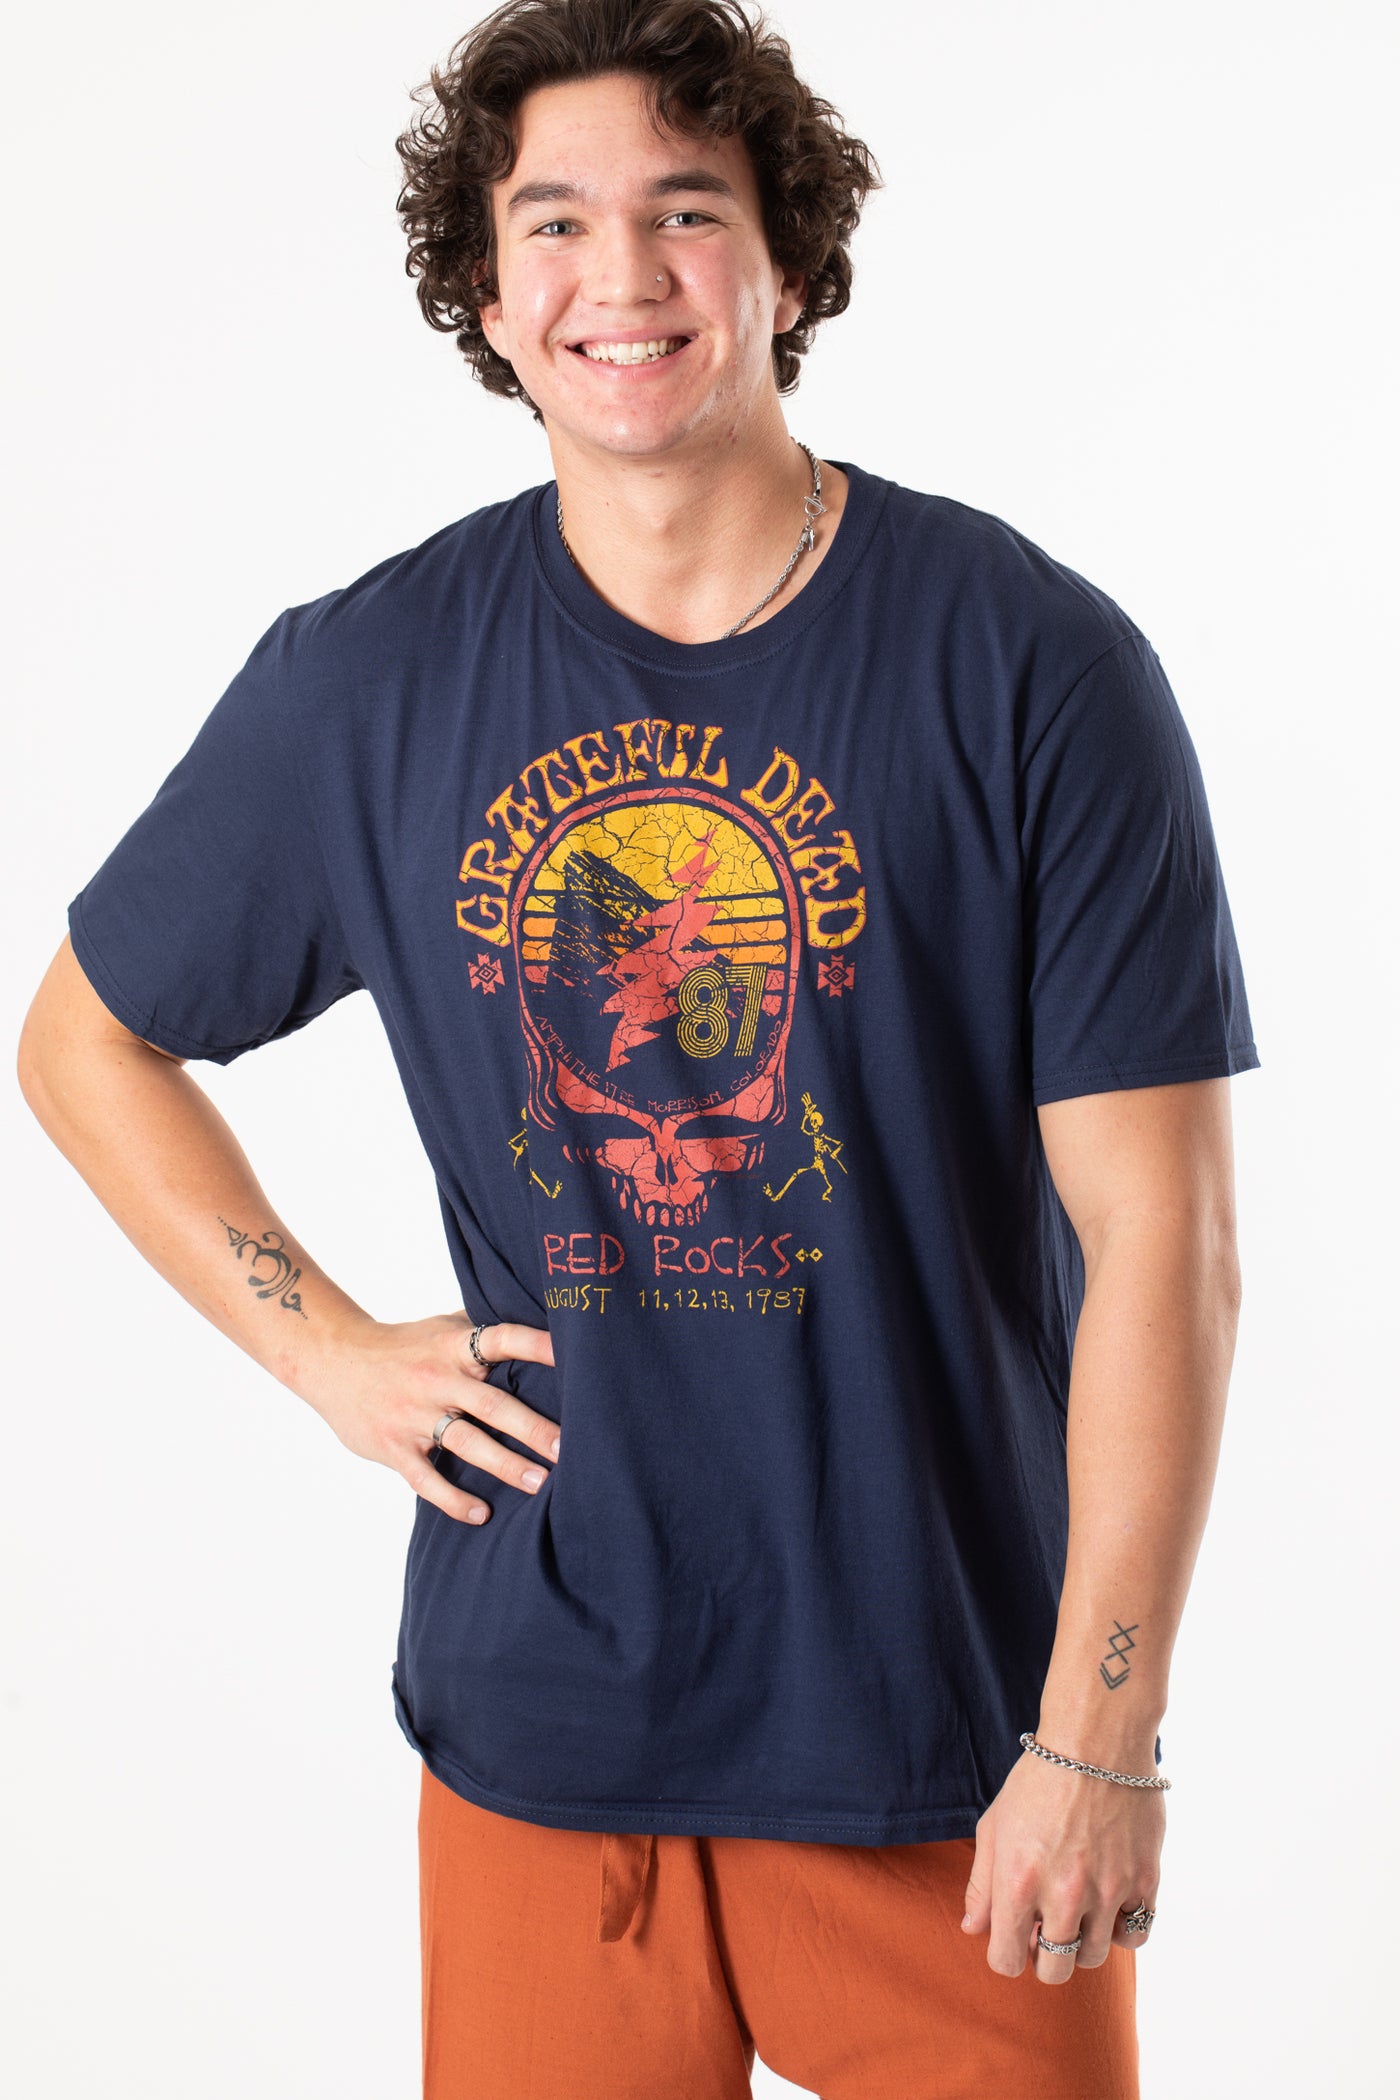 Red Rocks 87 Grateful Dead T Shirt